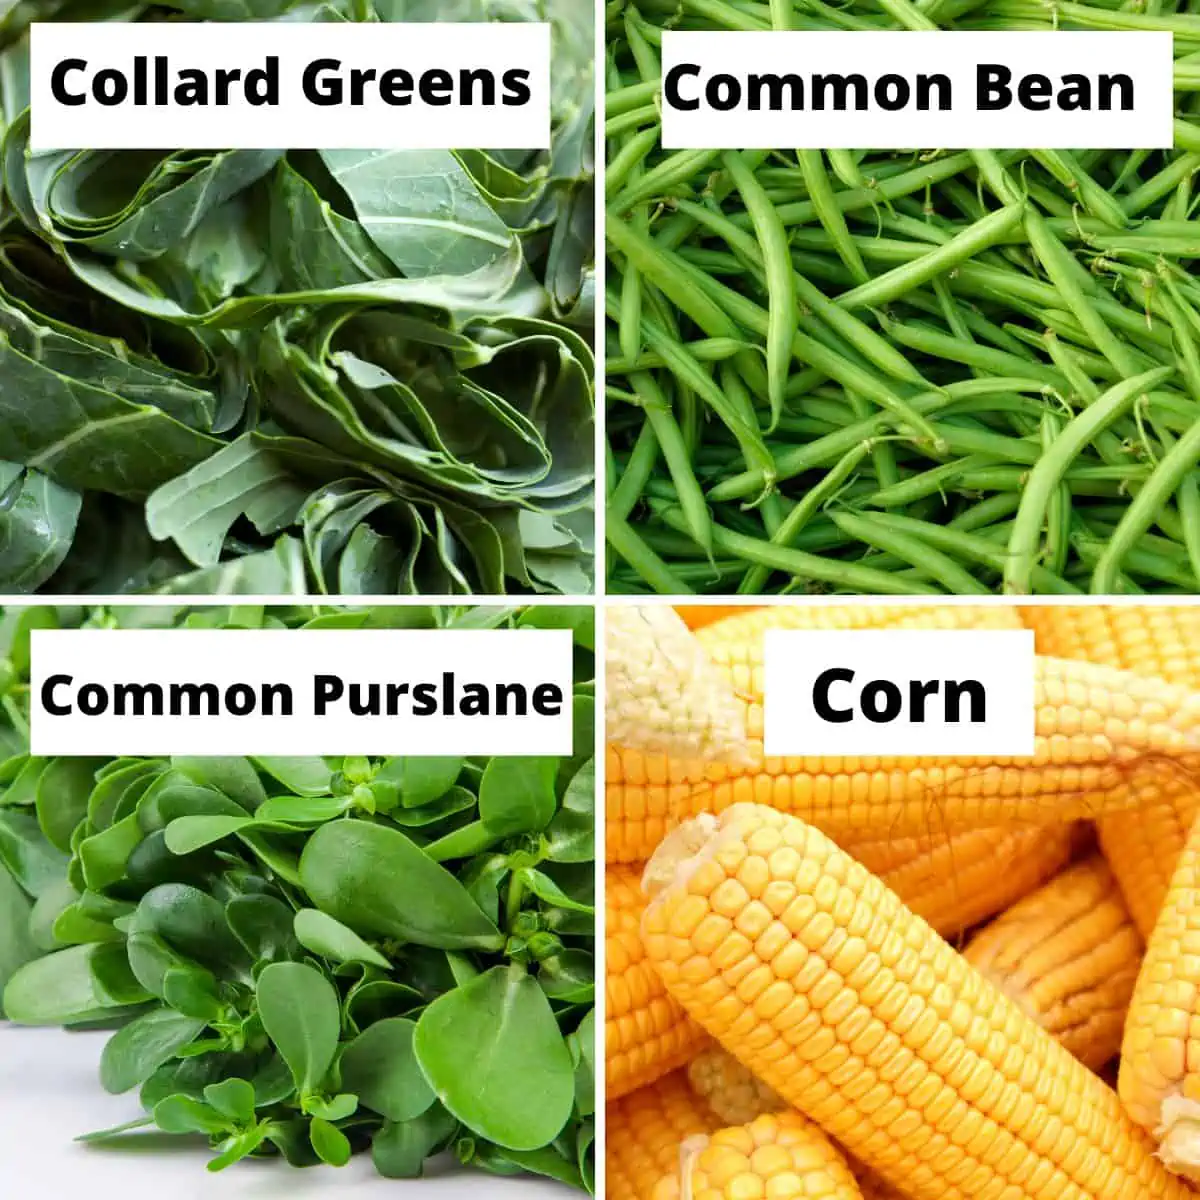 Vegetables that Start with C: Collard greens, green beans, common purslane, corn.
